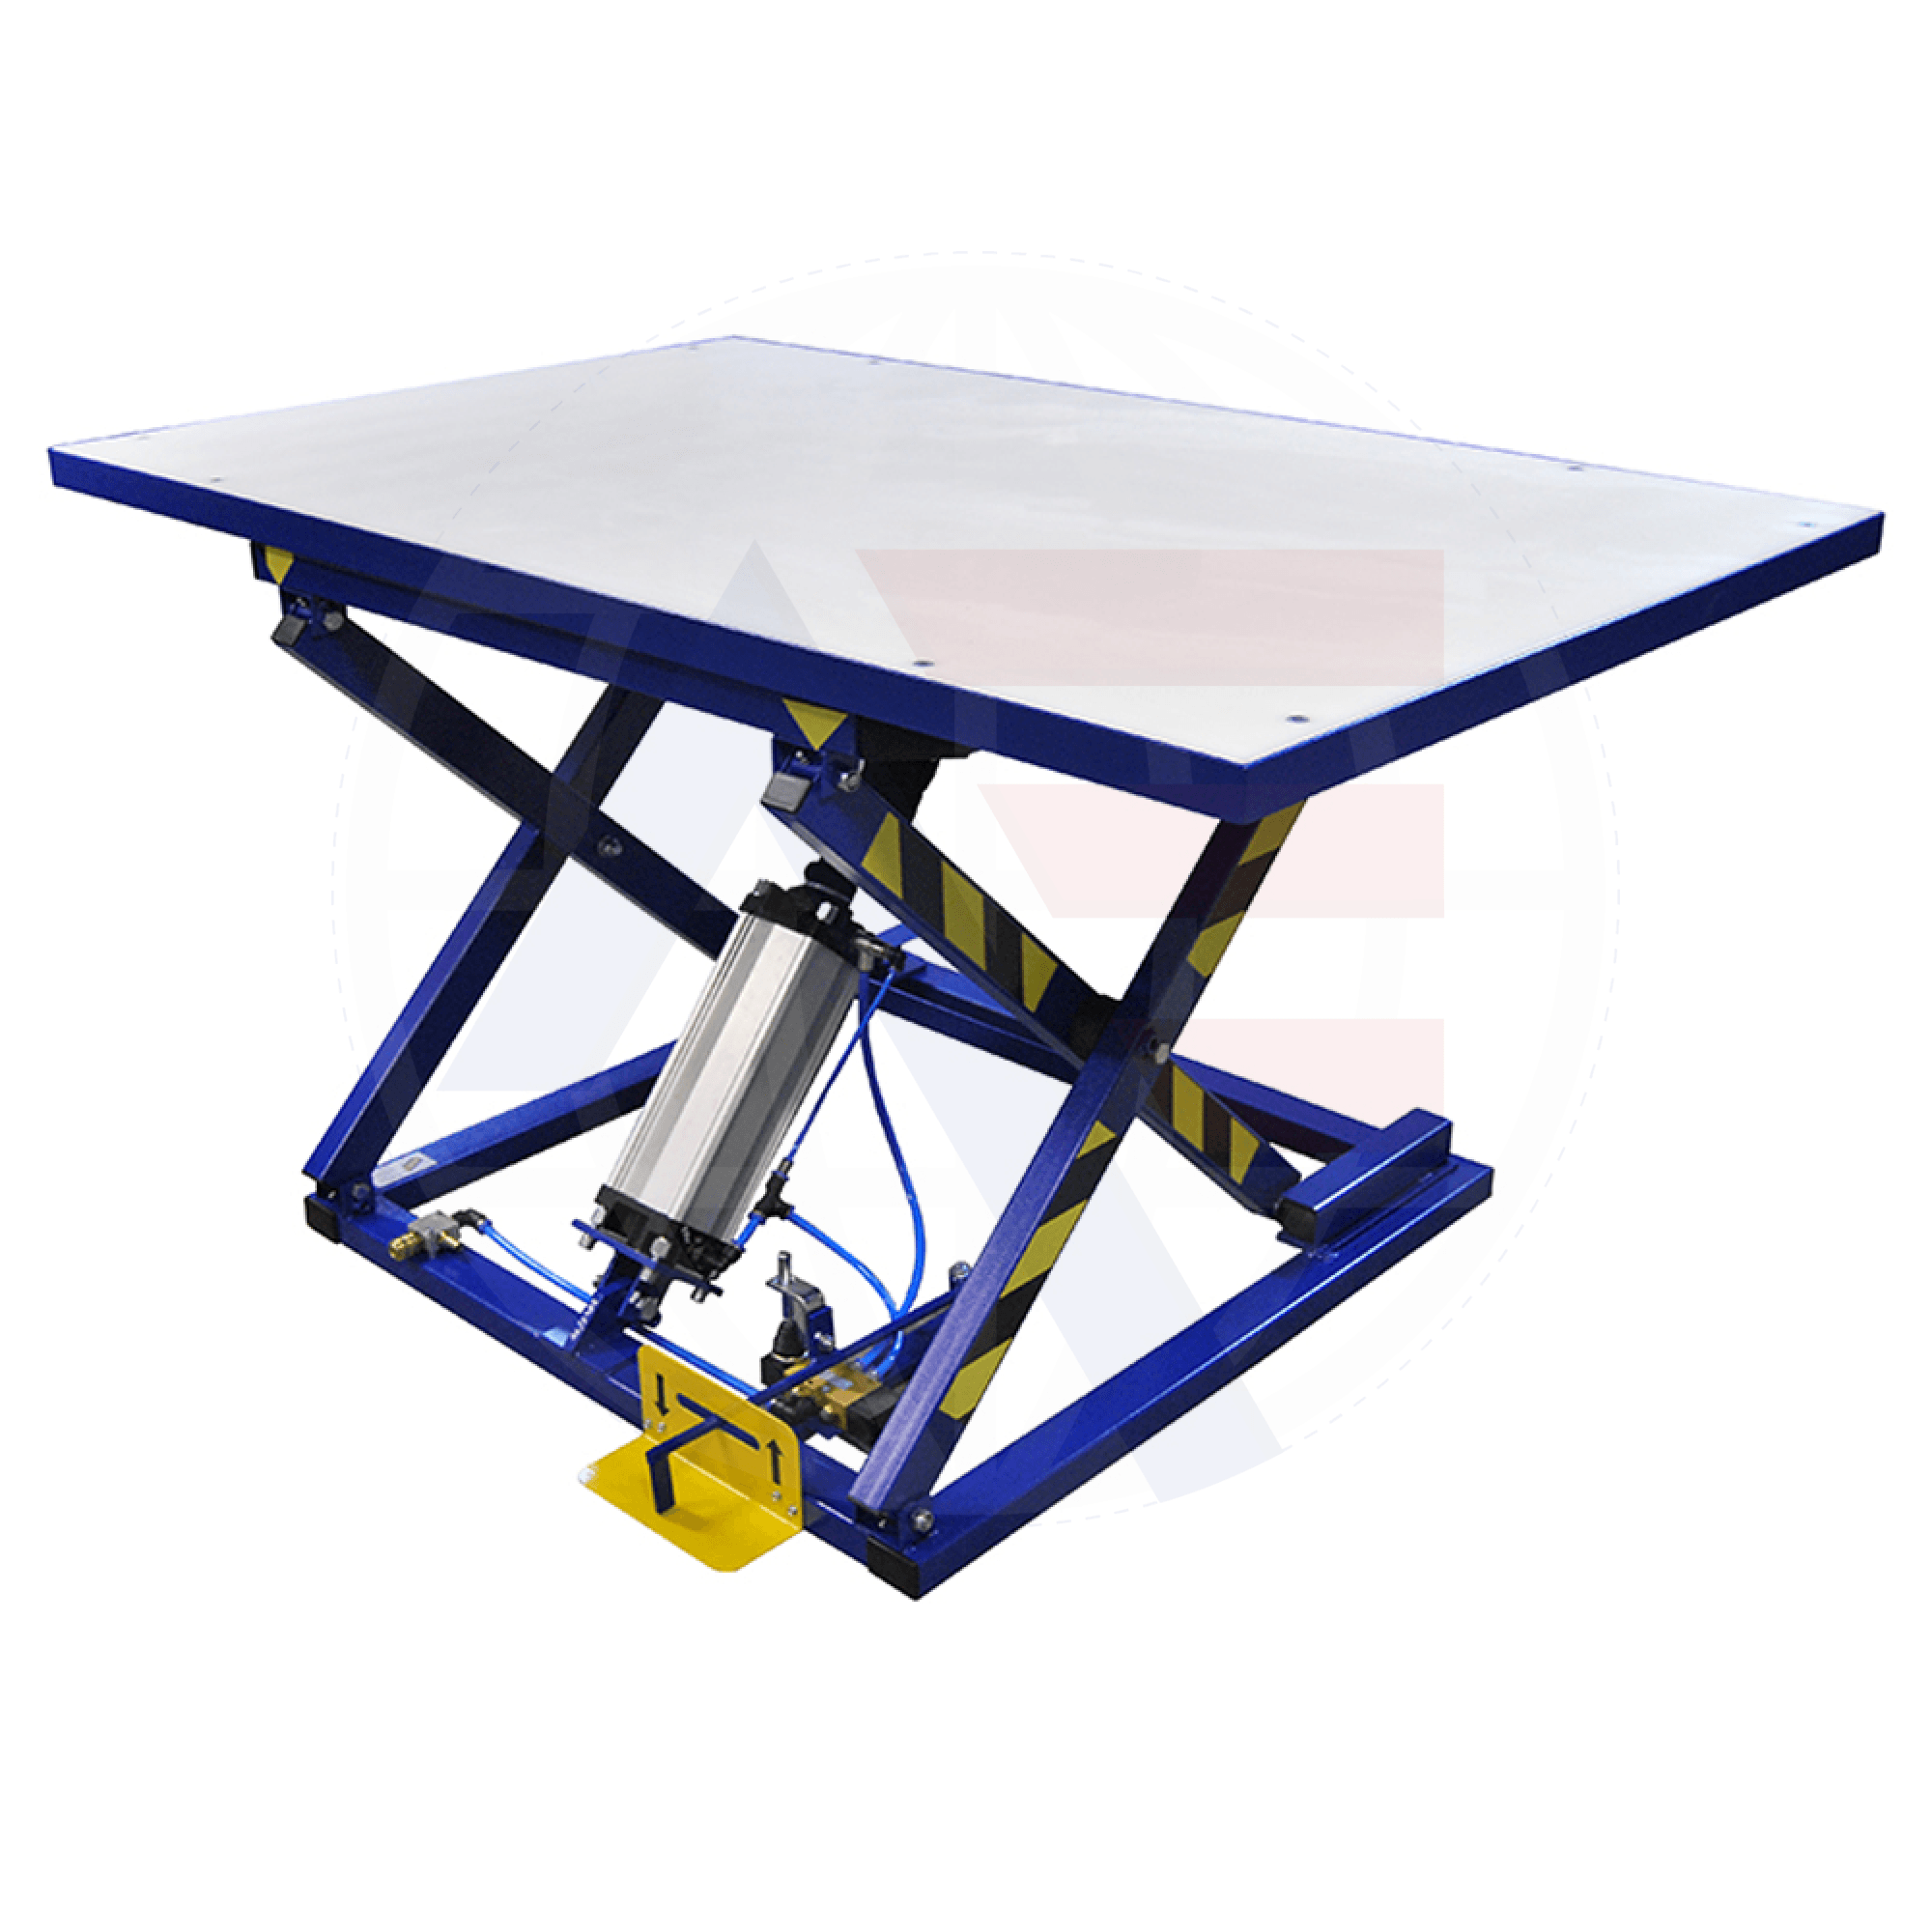 Rexel St-2/ok Pneumatic Lifting Table Tables